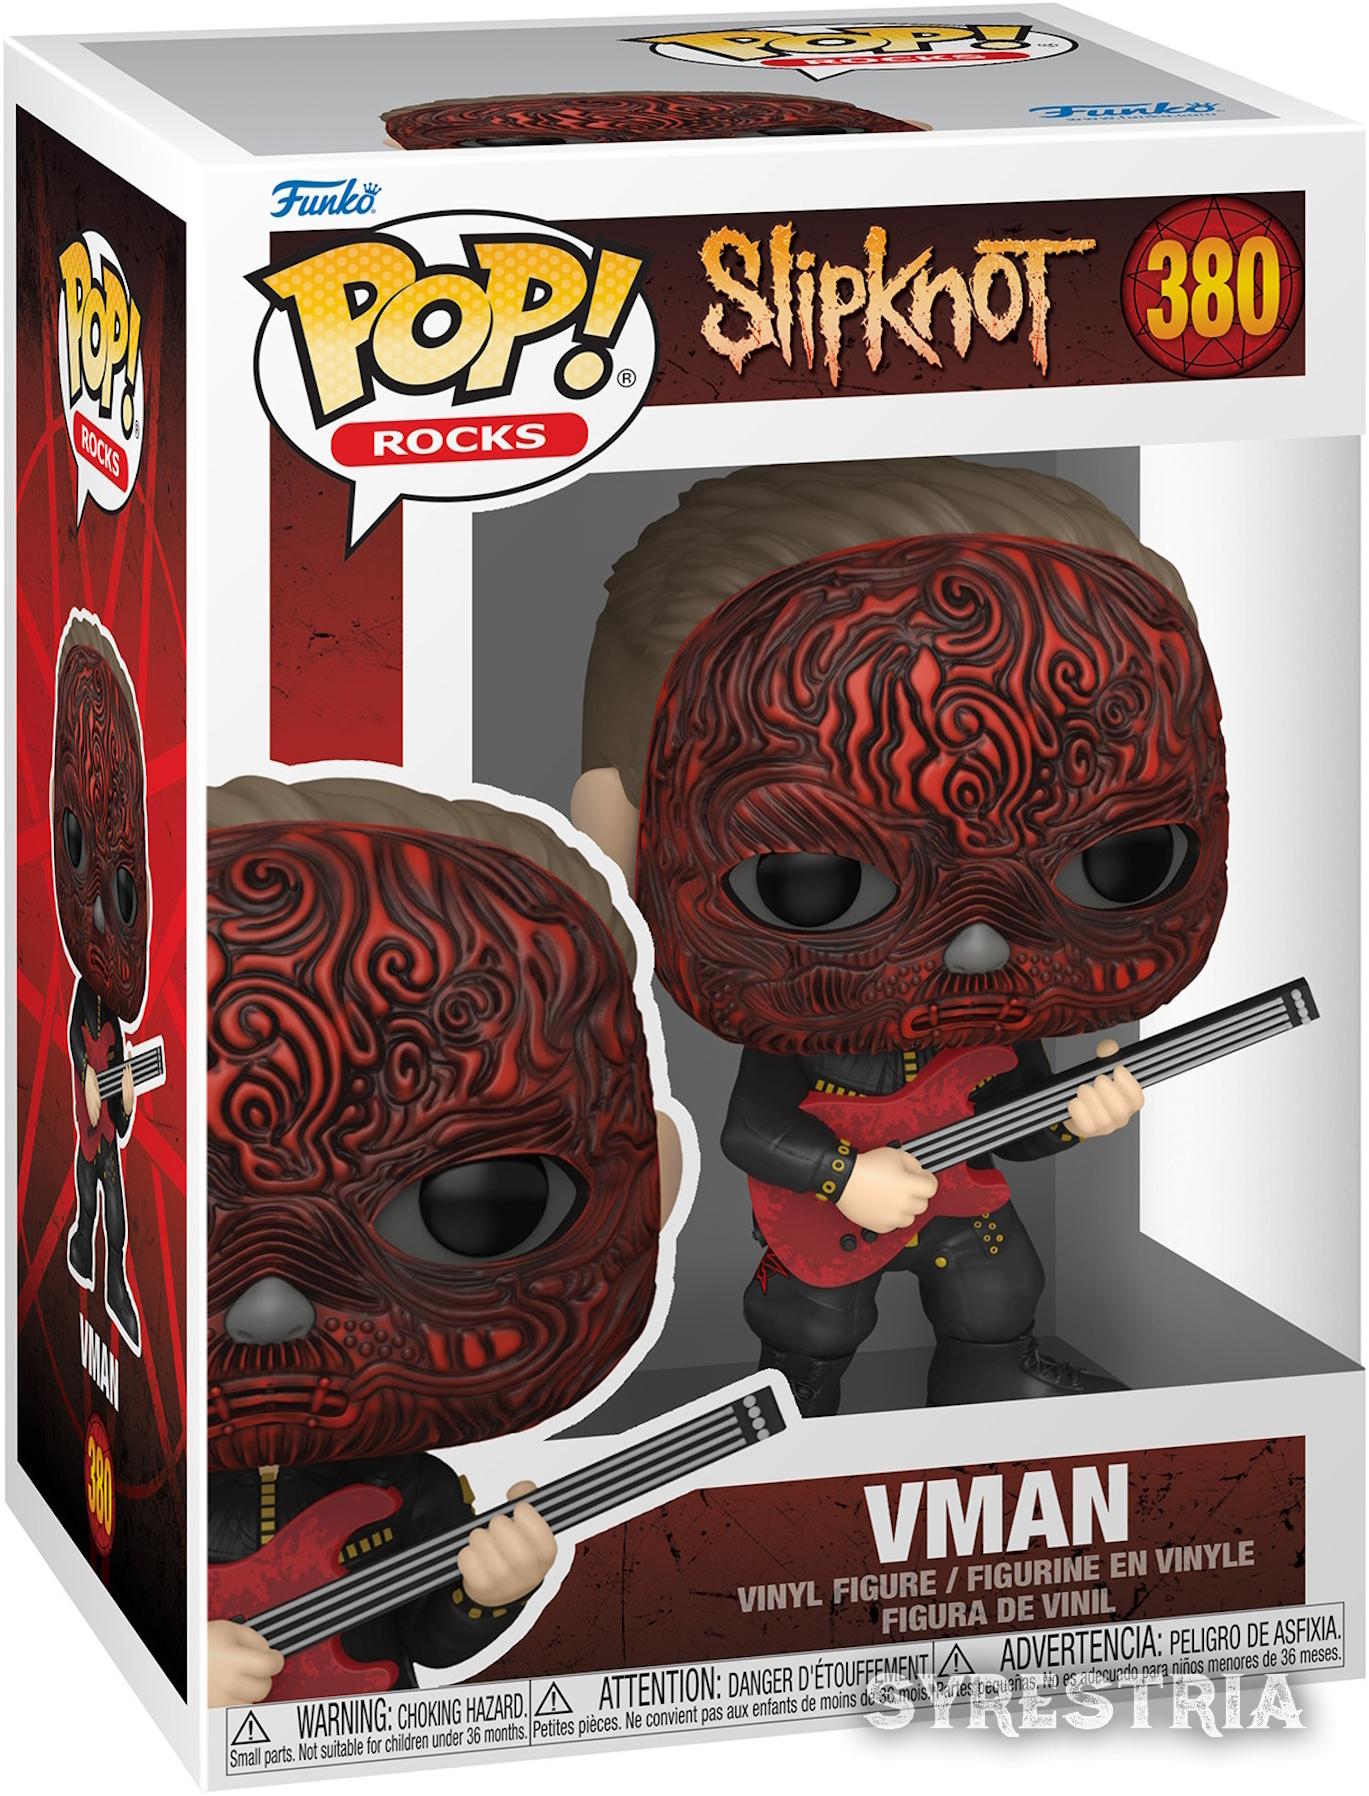 Slipknot - Vman 380  - Funko Pop! Vinyl Figur